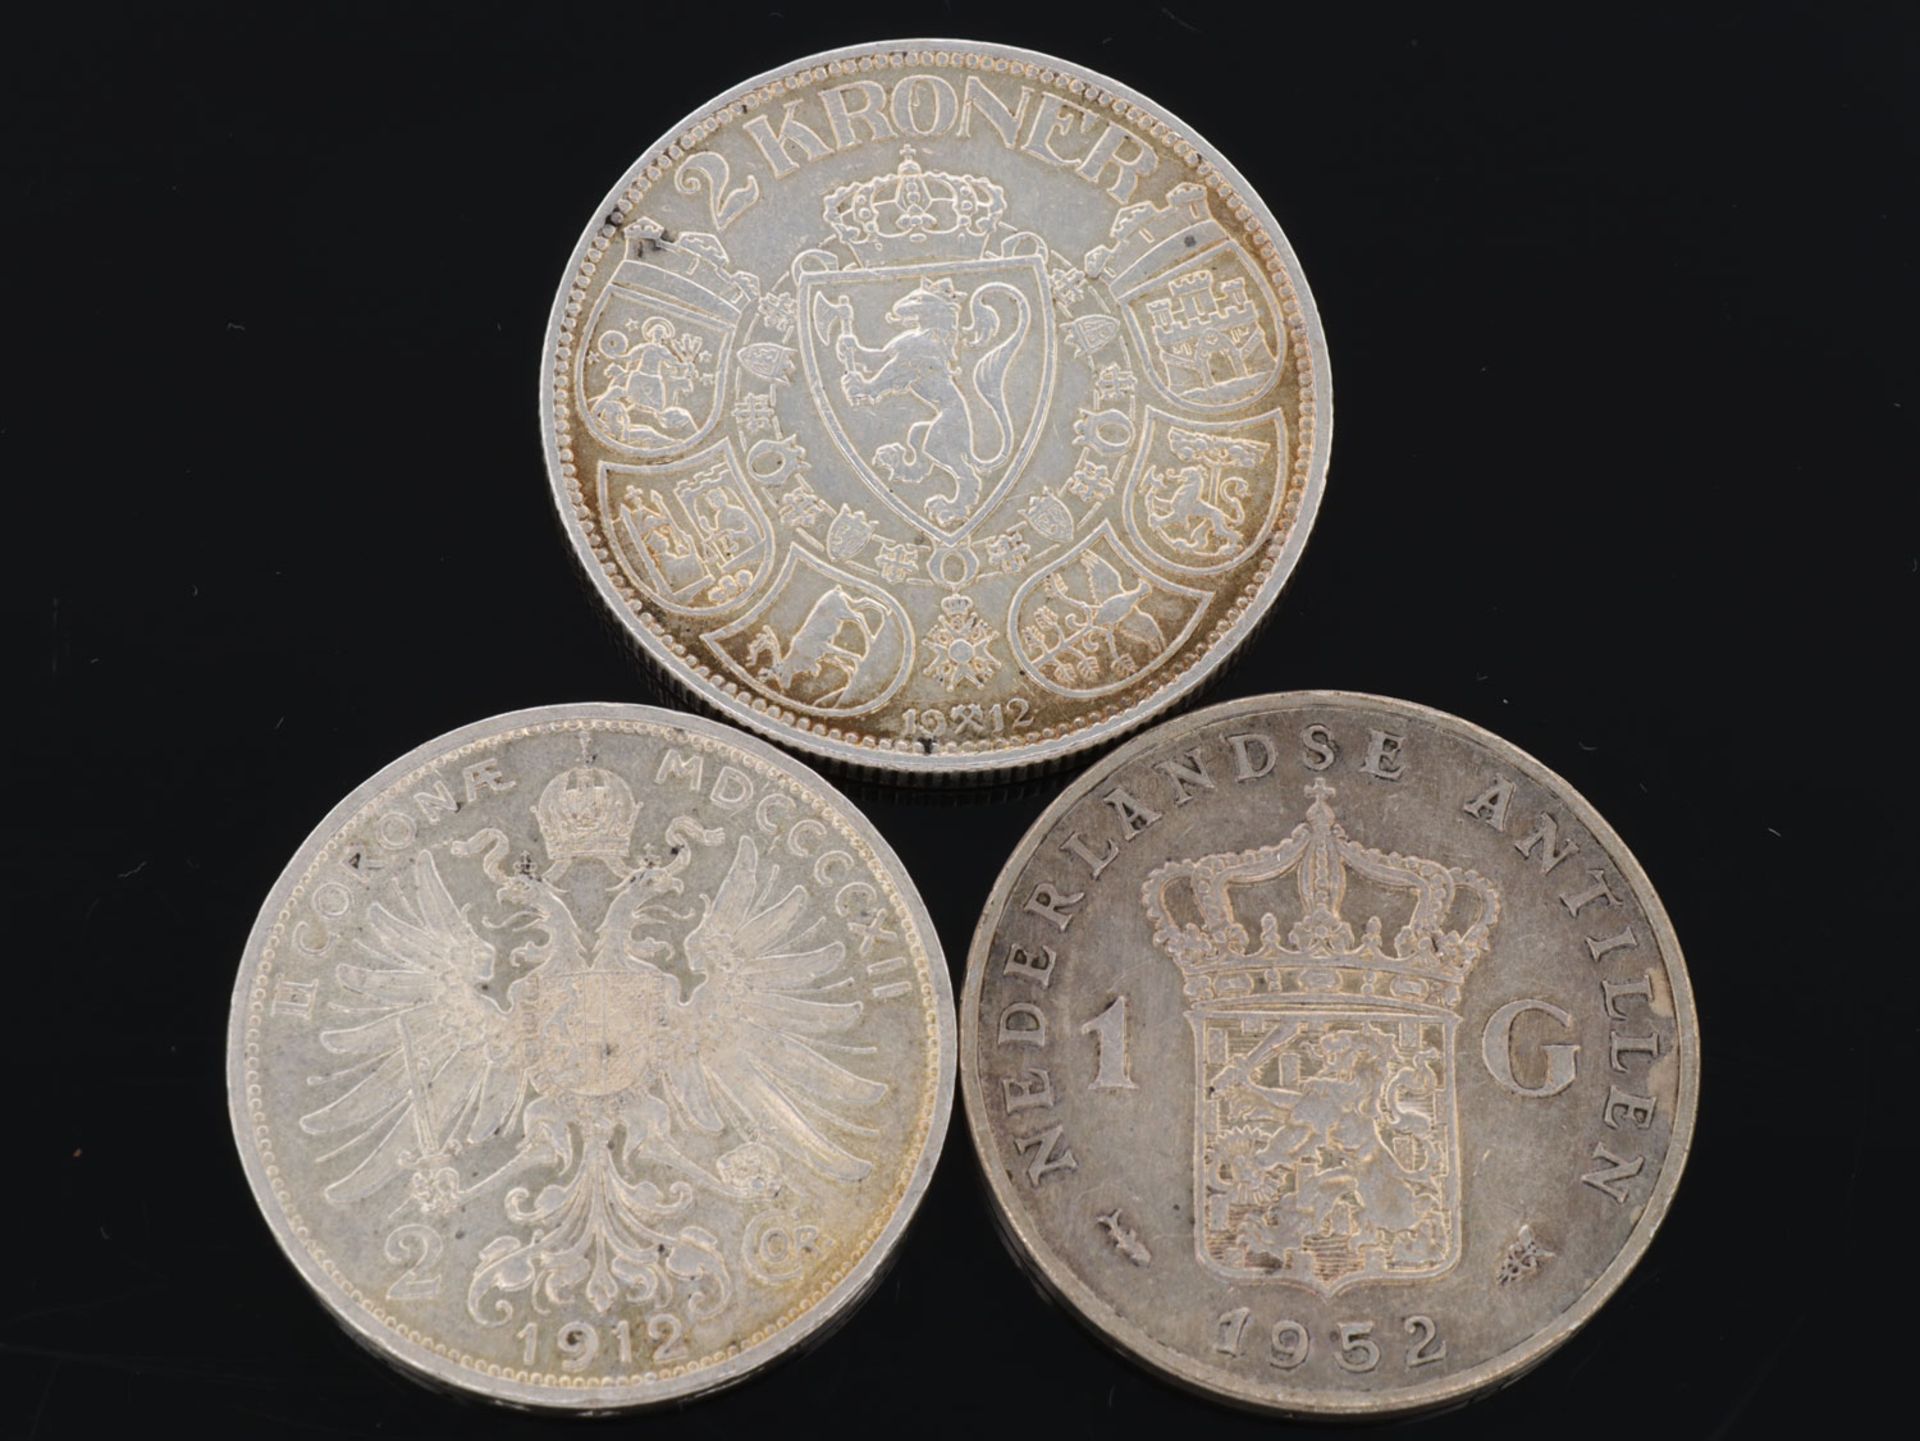 Silbermünzen - Image 5 of 6